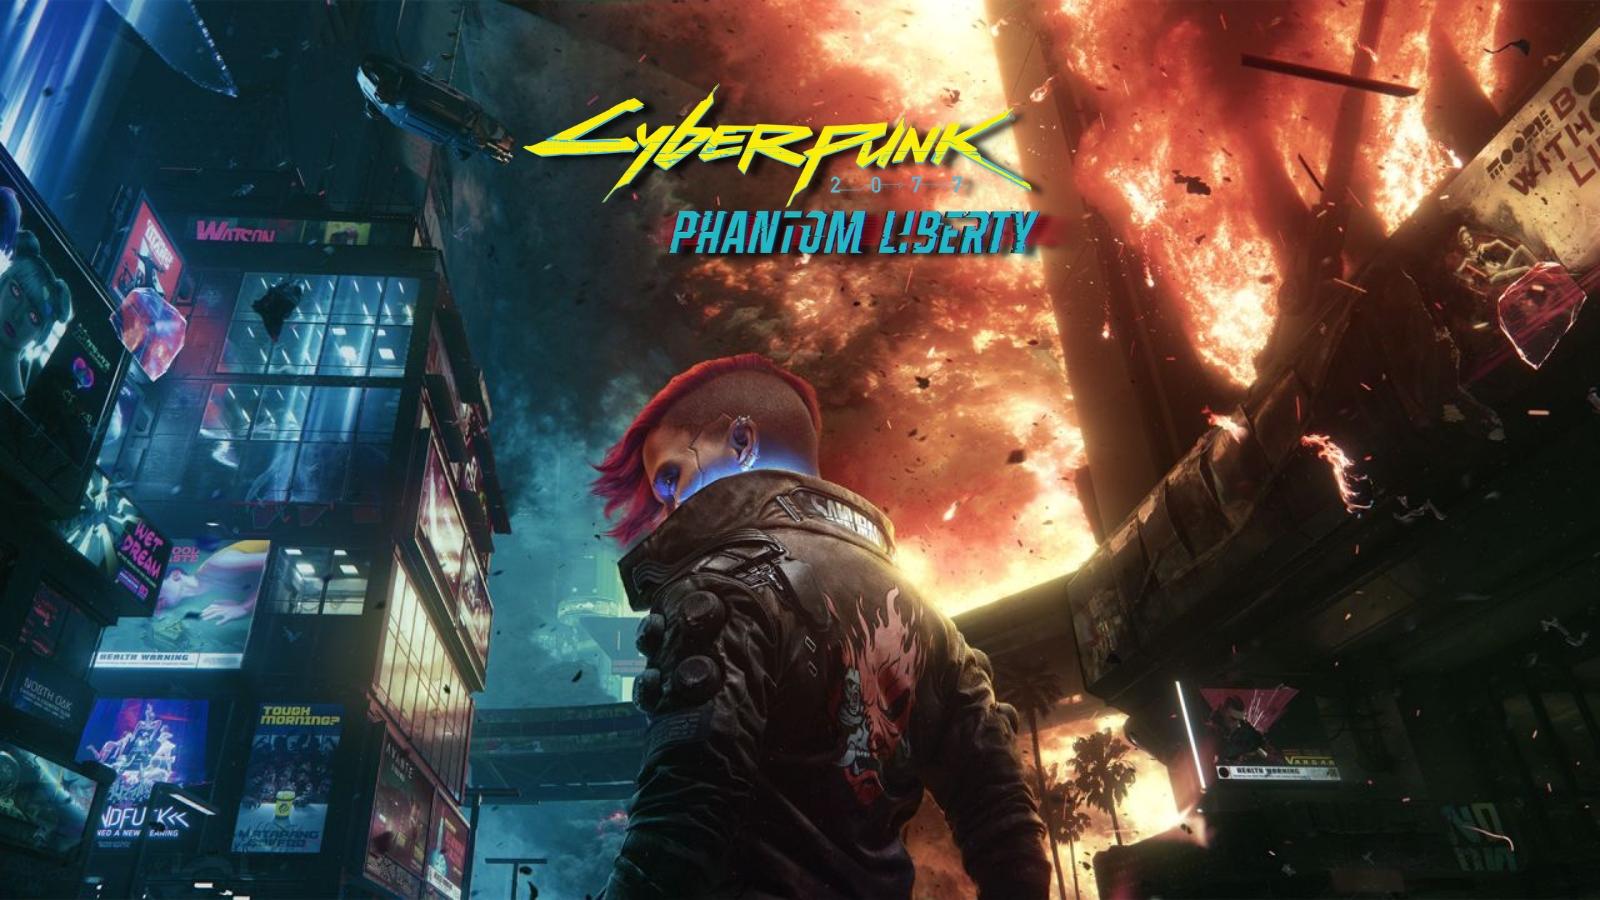 Cyberpunk 2077 Phantom Liberty cover